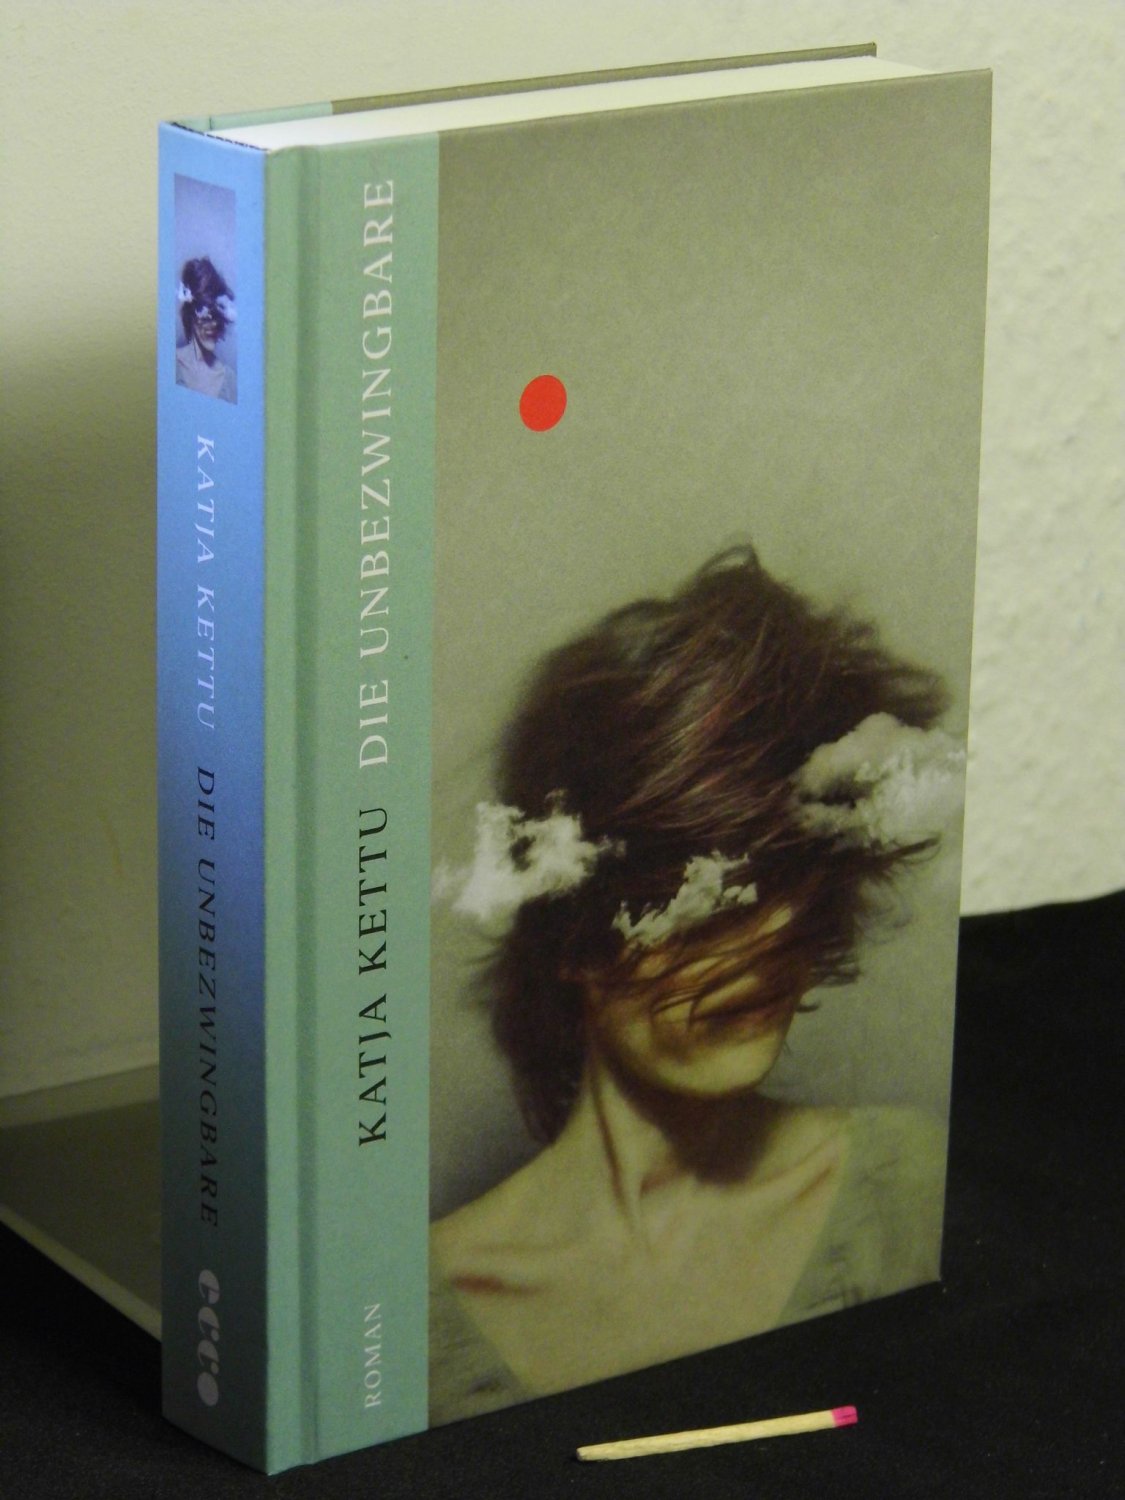 Die Unbezwingbare - Roman - Originaltitel: Rose on Poissa -“ (Kettu, Katja  -) – Buch gebraucht kaufen – A02vGjCD01ZZc